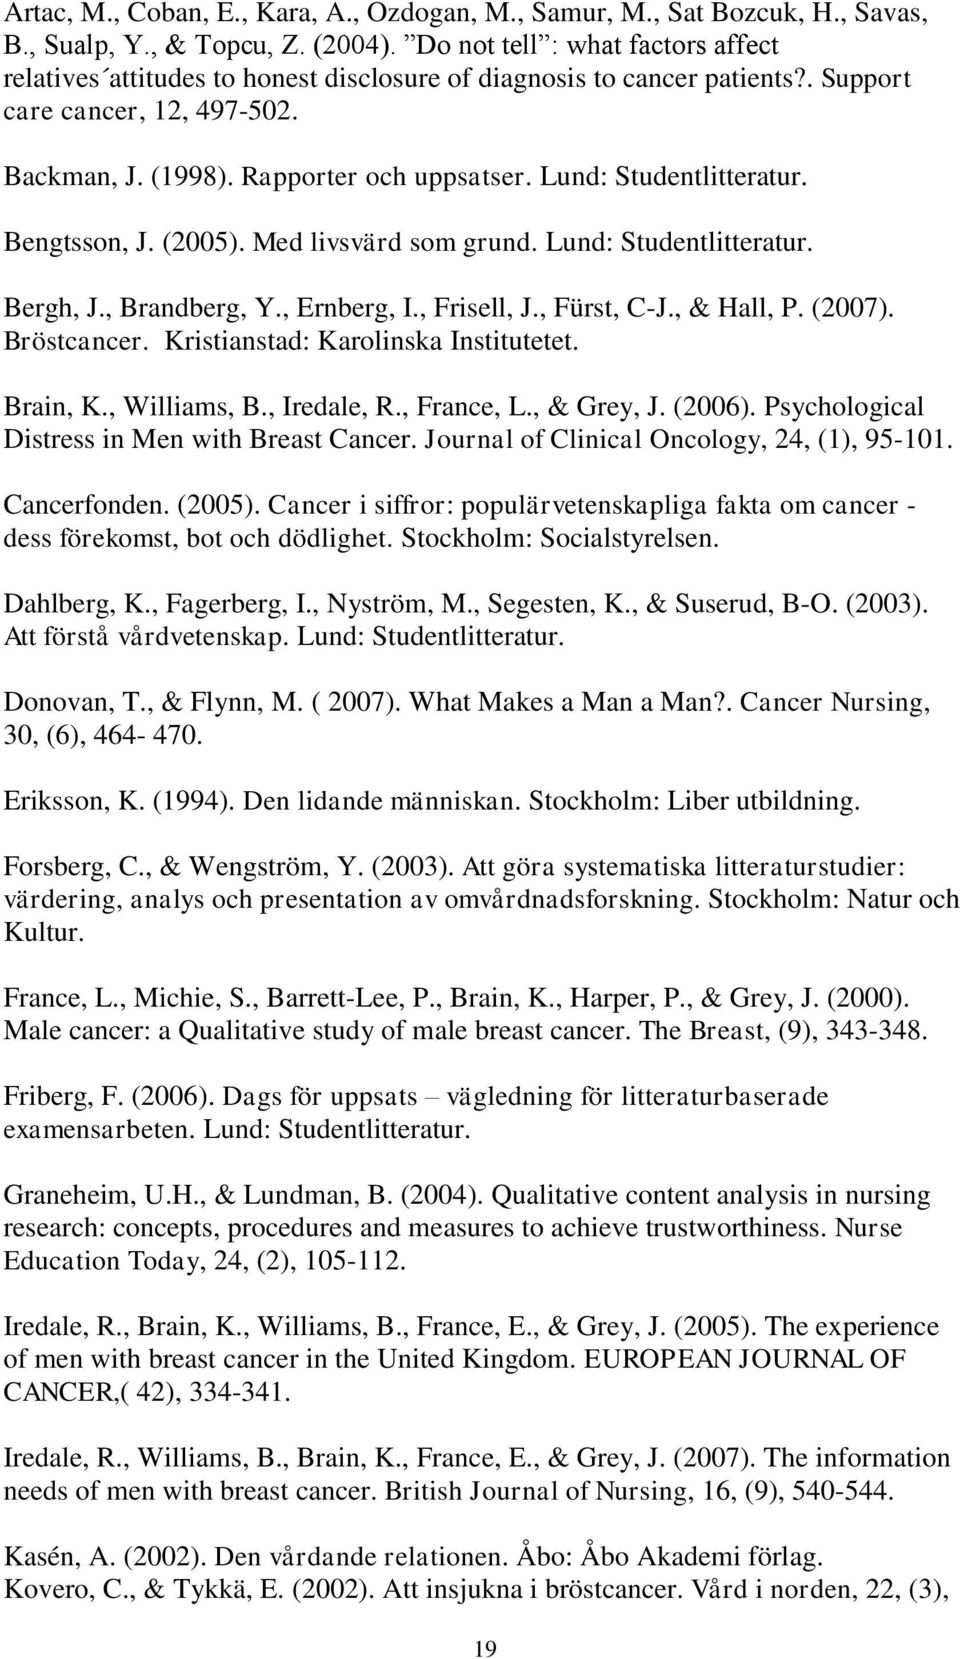 Lund: Studentlitteratur. Bengtsson, J. (25). Med livsvärd som grund. Lund: Studentlitteratur. Bergh, J., Brandberg, Y., Ernberg, I., Frisell, J., Fürst, C-J., & Hall, P. (27). Bröstcancer.